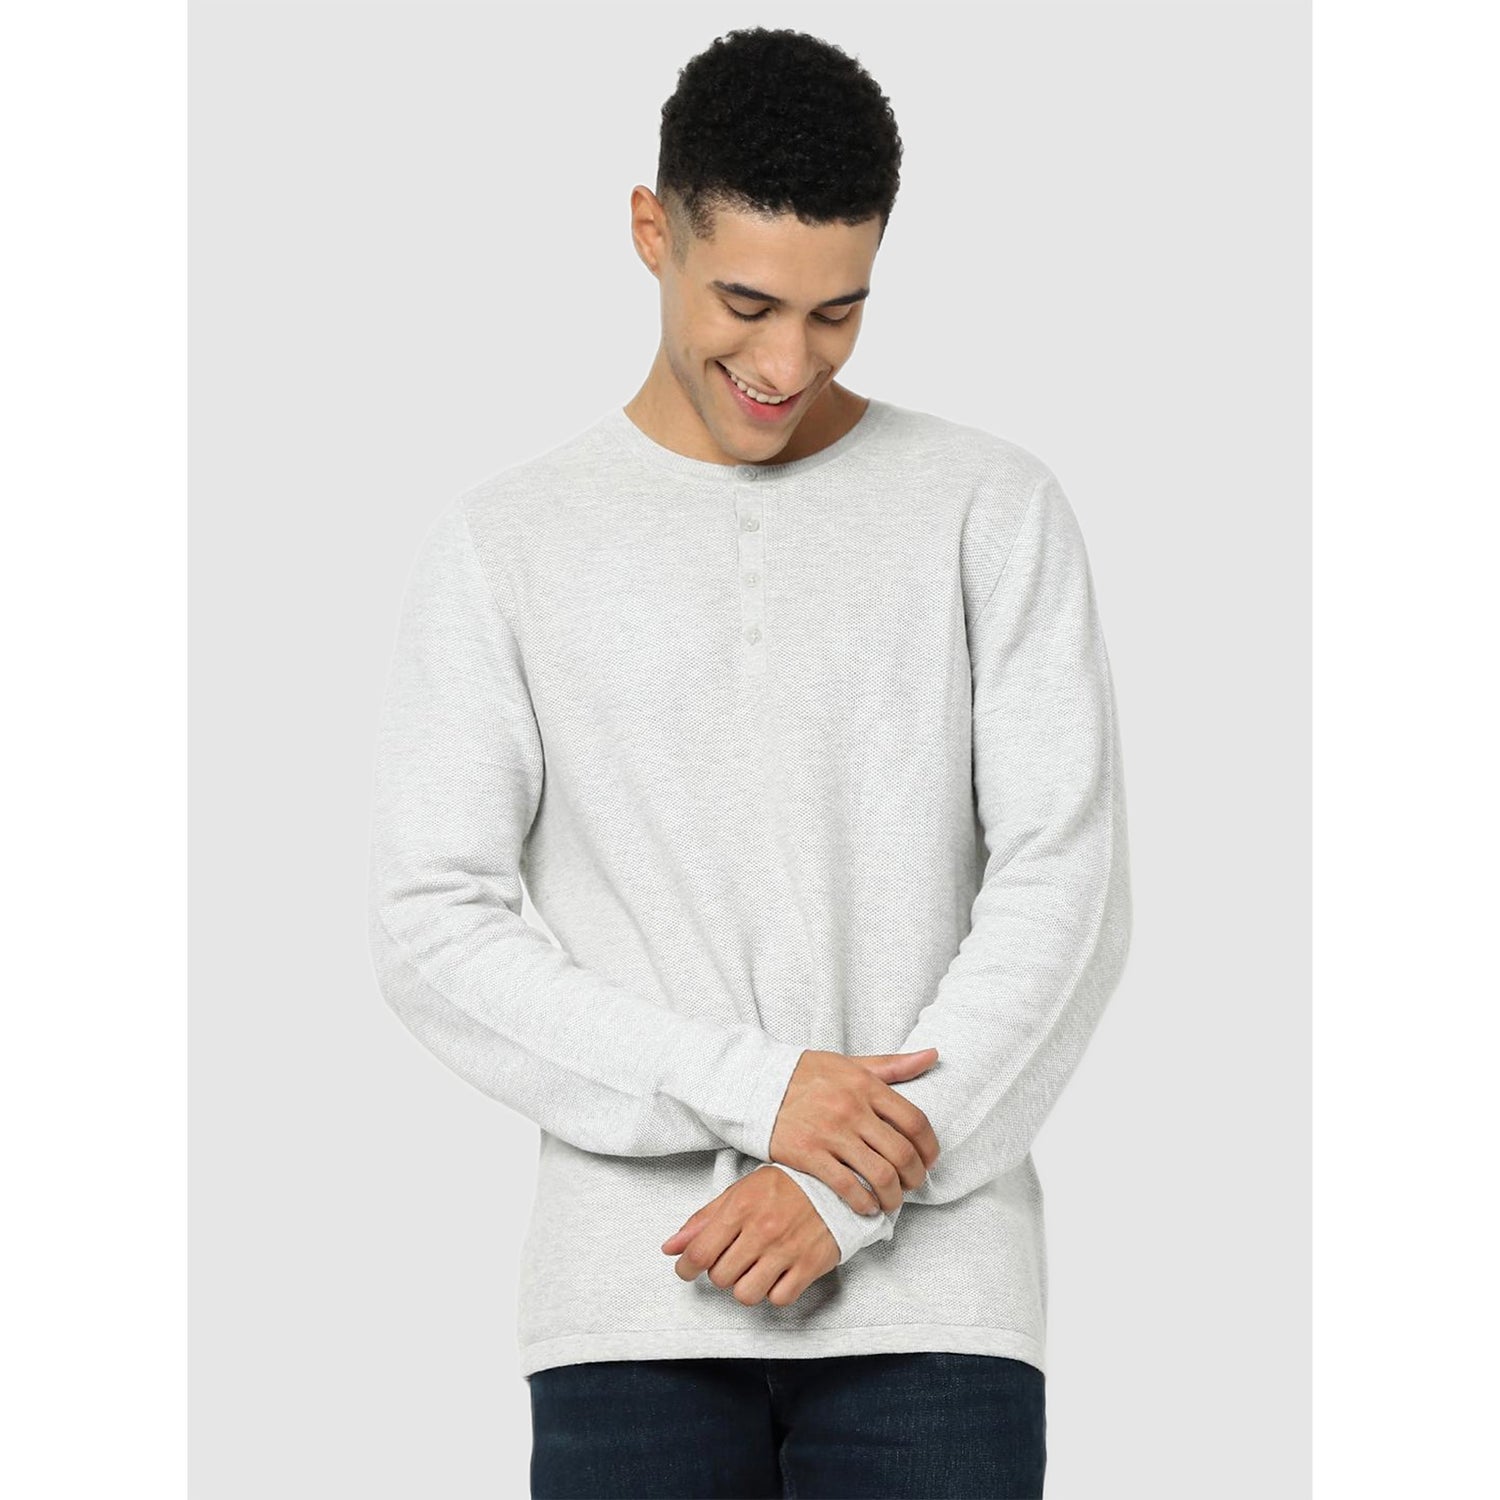 Light Grey Solid Regular Fit Cotton Pullover Sweater (CEHENPIK)